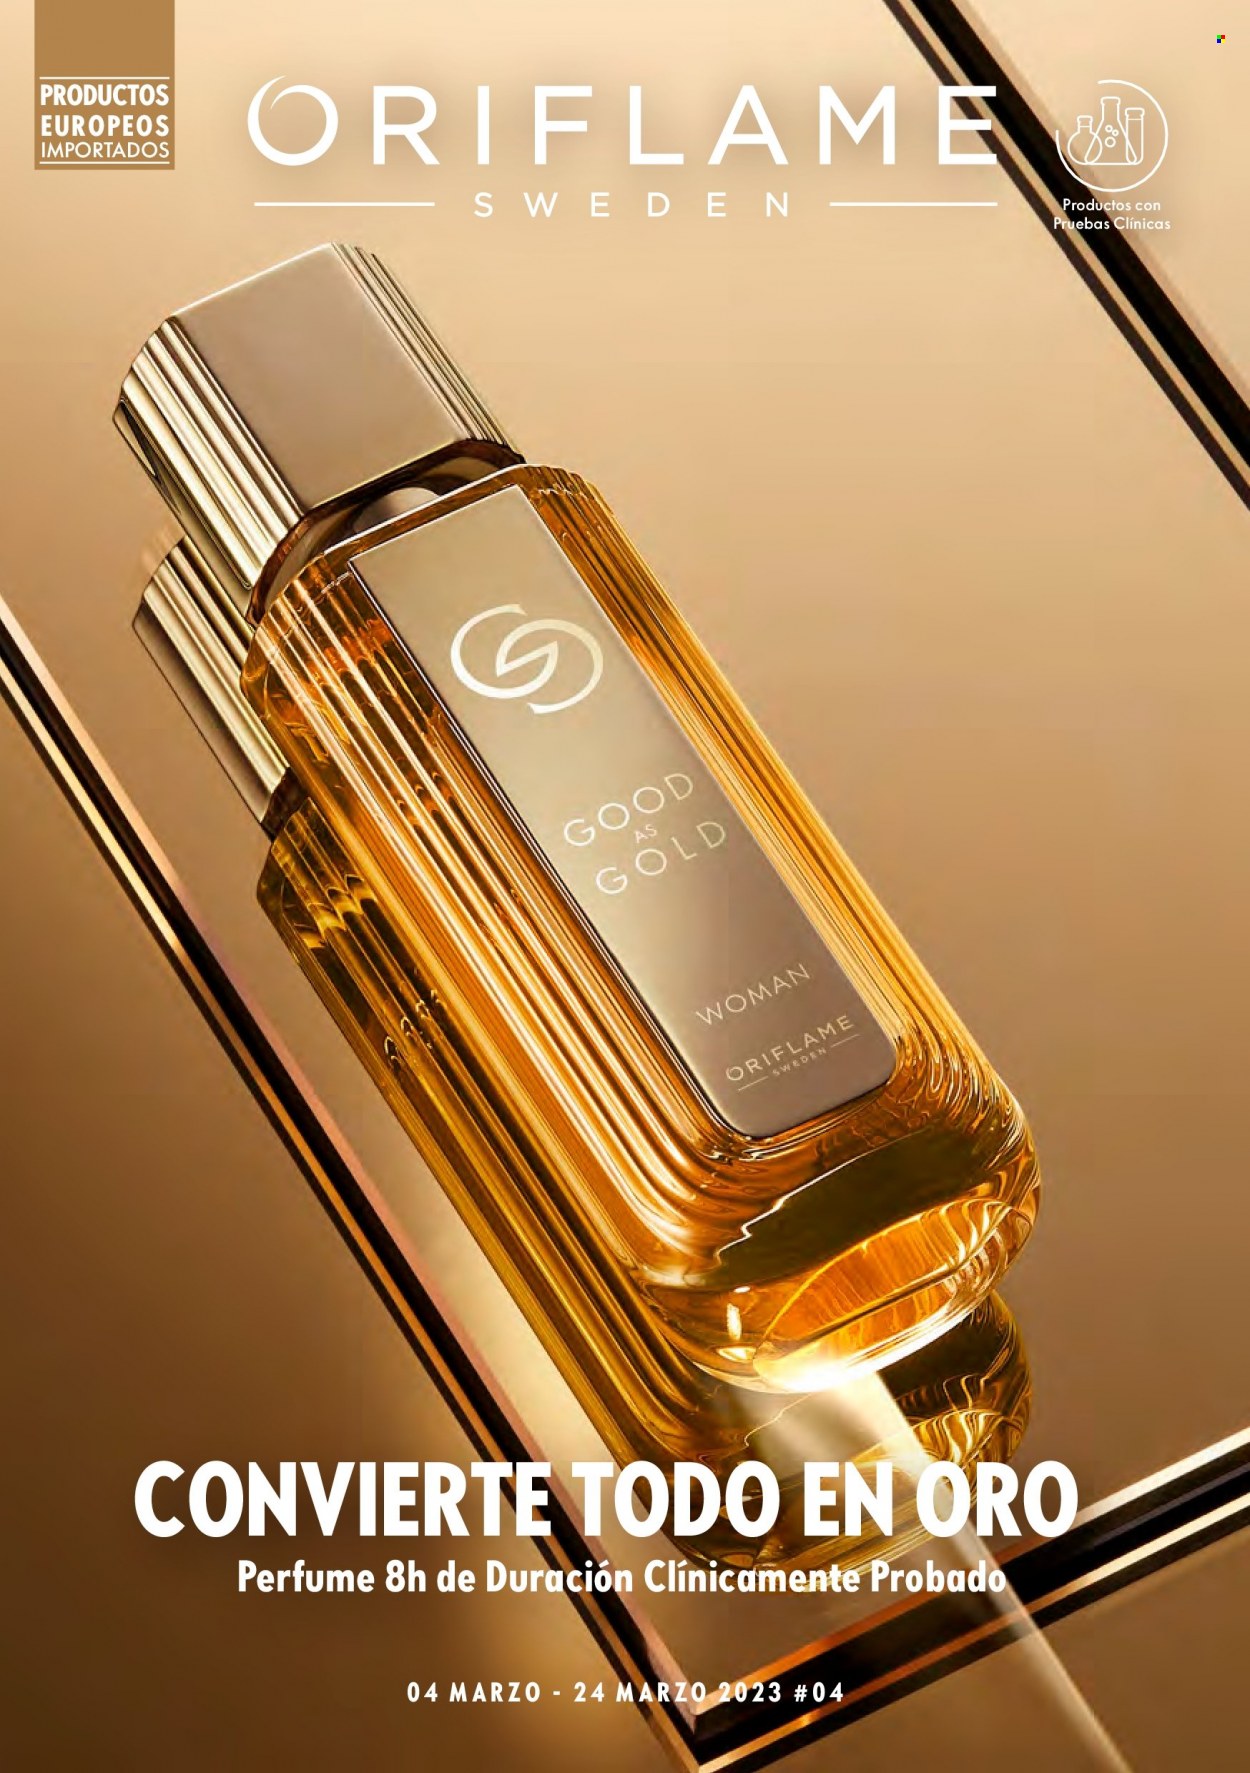 thumbnail - Catálogo Oriflame - 04.03.2023 - 24.03.2023 - Ventas - perfume. Página 1.